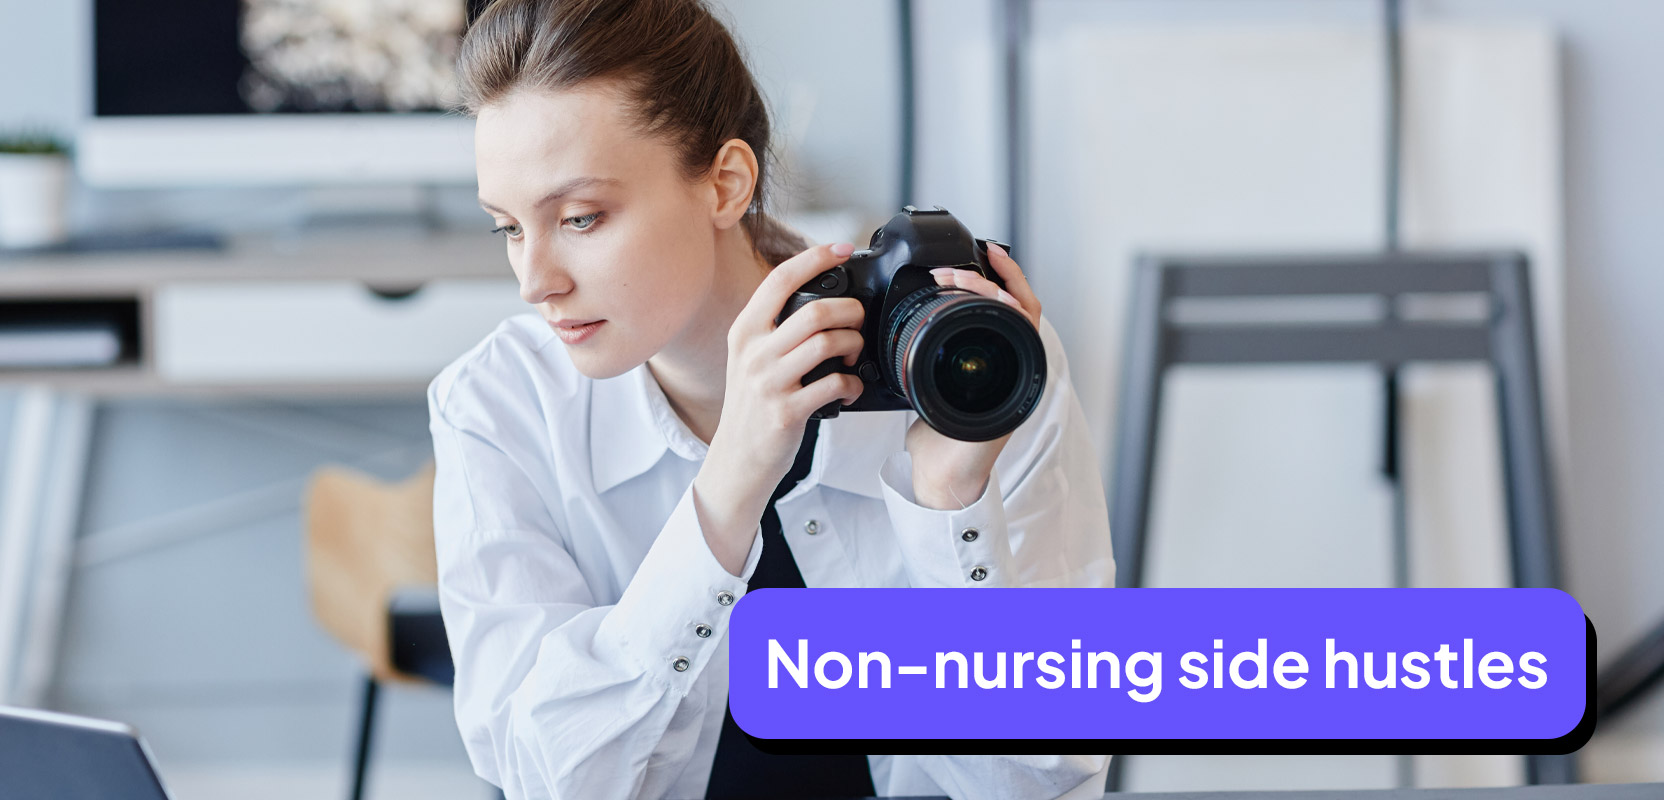 Nurse taking photographs with a camera as a non-nursing side hustle